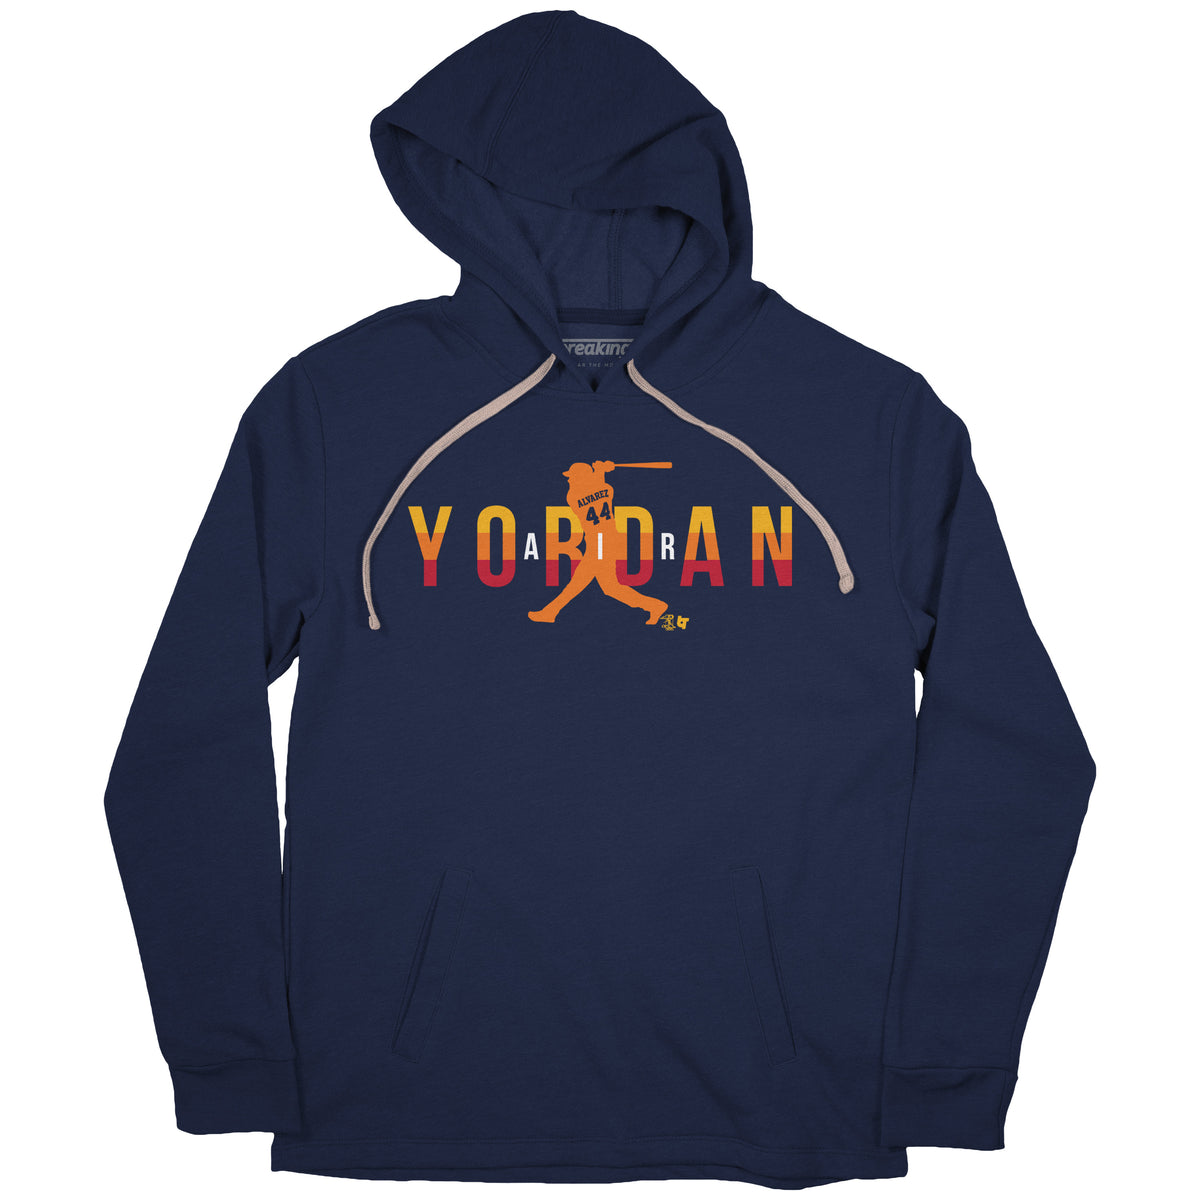 Whos Yordaddy Shirt Air Yordan Shirt Baseball Graphic Unisex Gifts